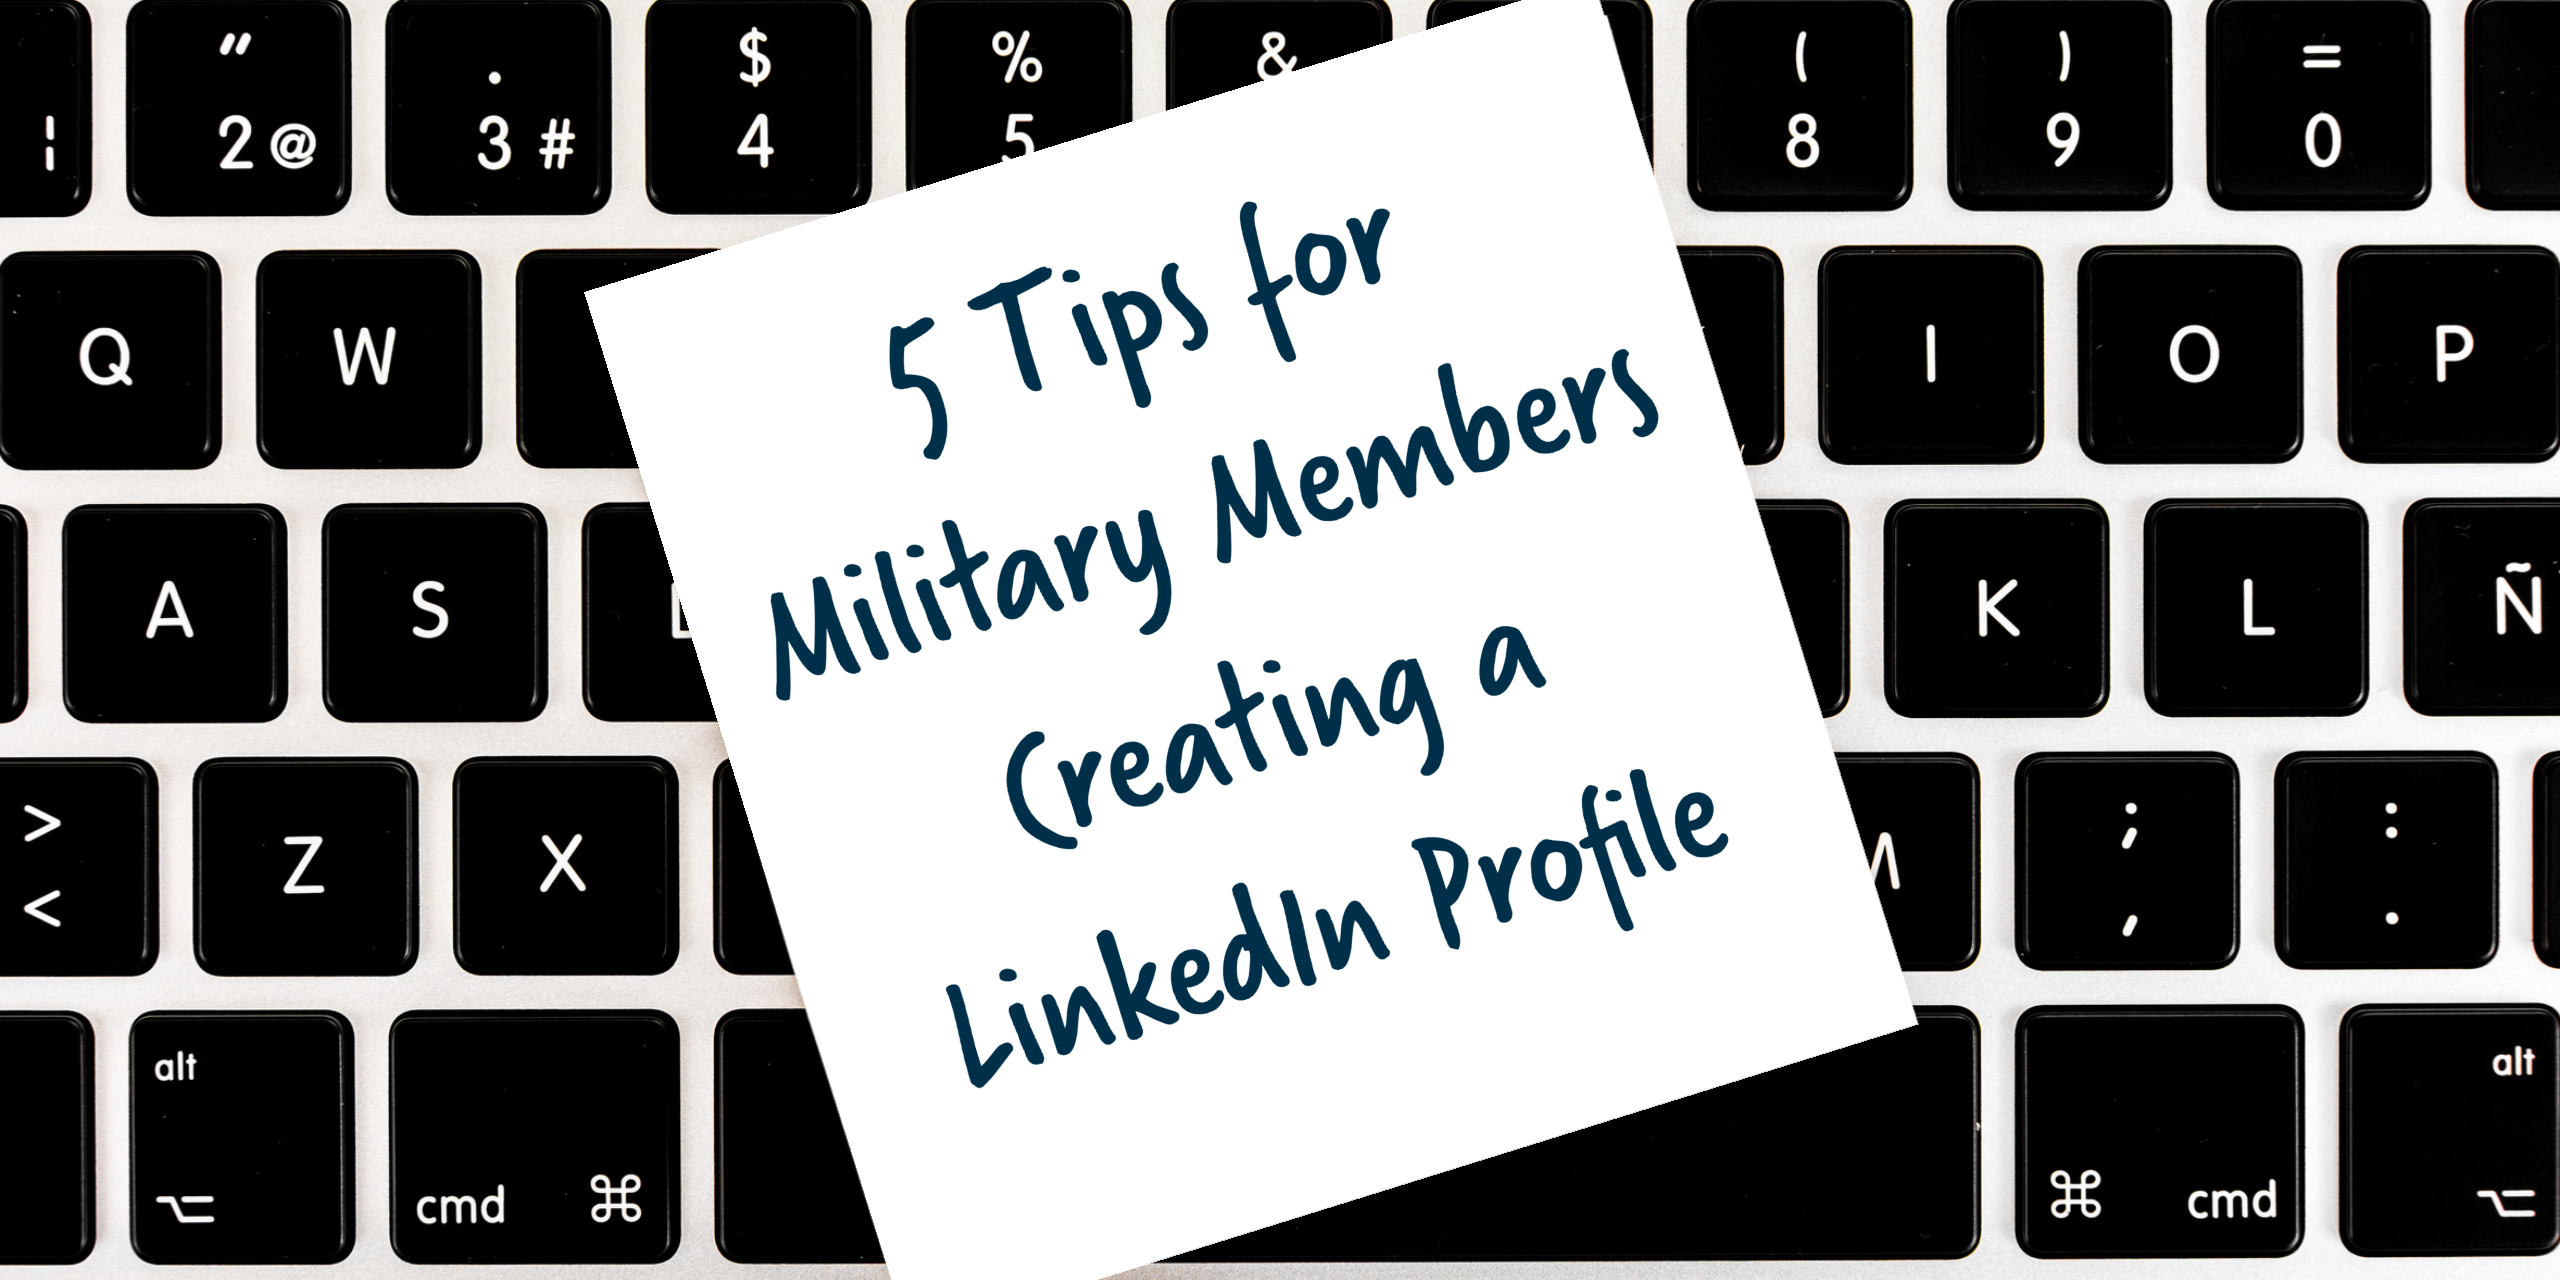 5_Tips_for_LinkedIn_Profile-1